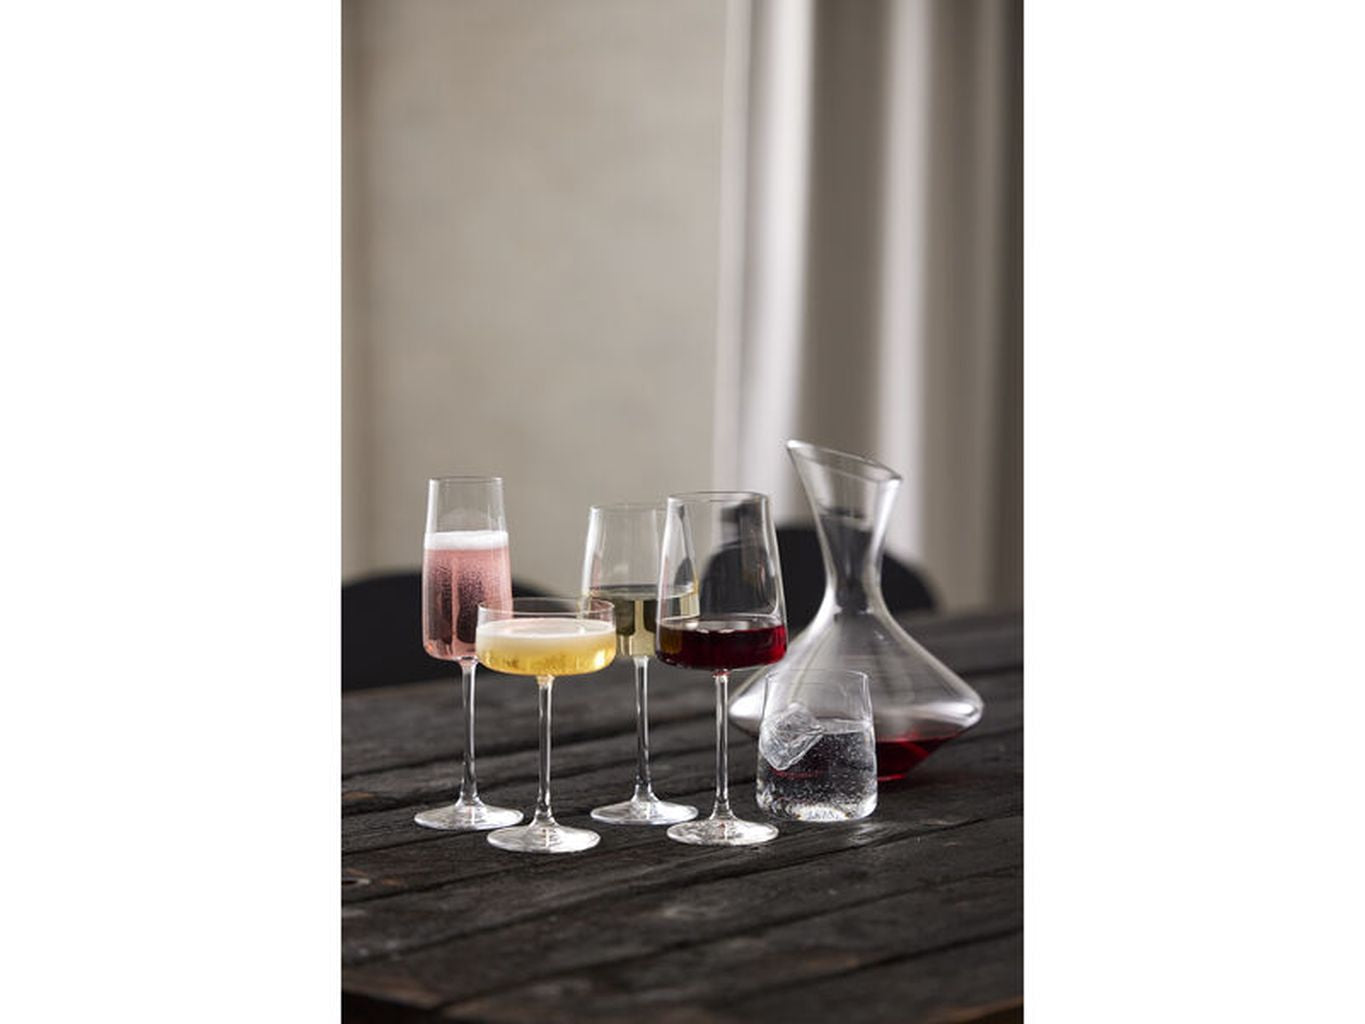 Lyngby Glas Zero Krystal White Wine Glass 43 Cl, 4 st.